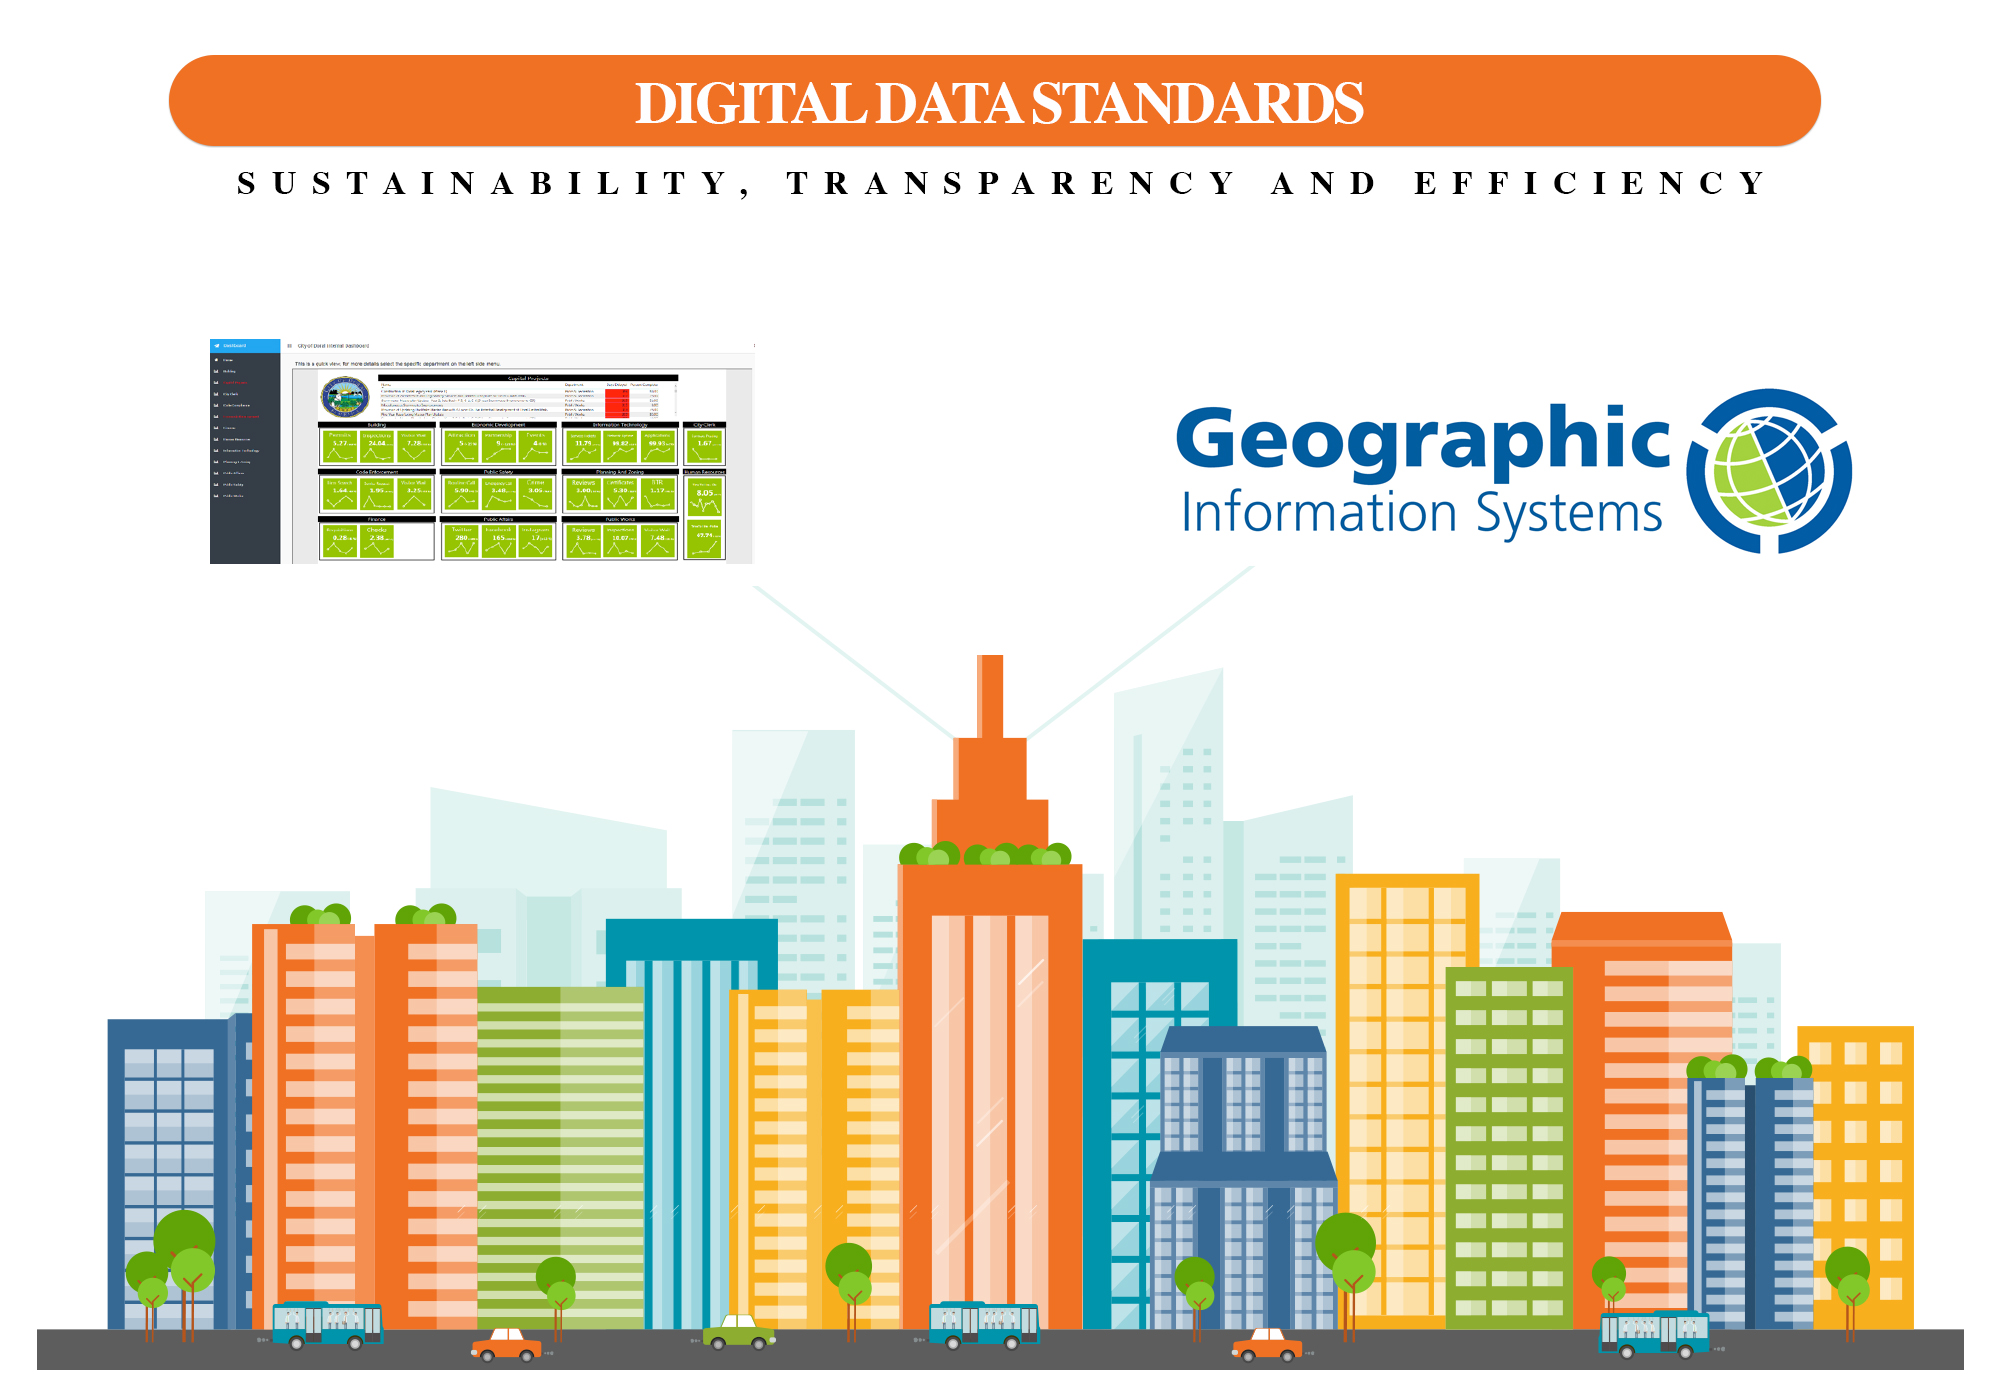 Digital Data Standards